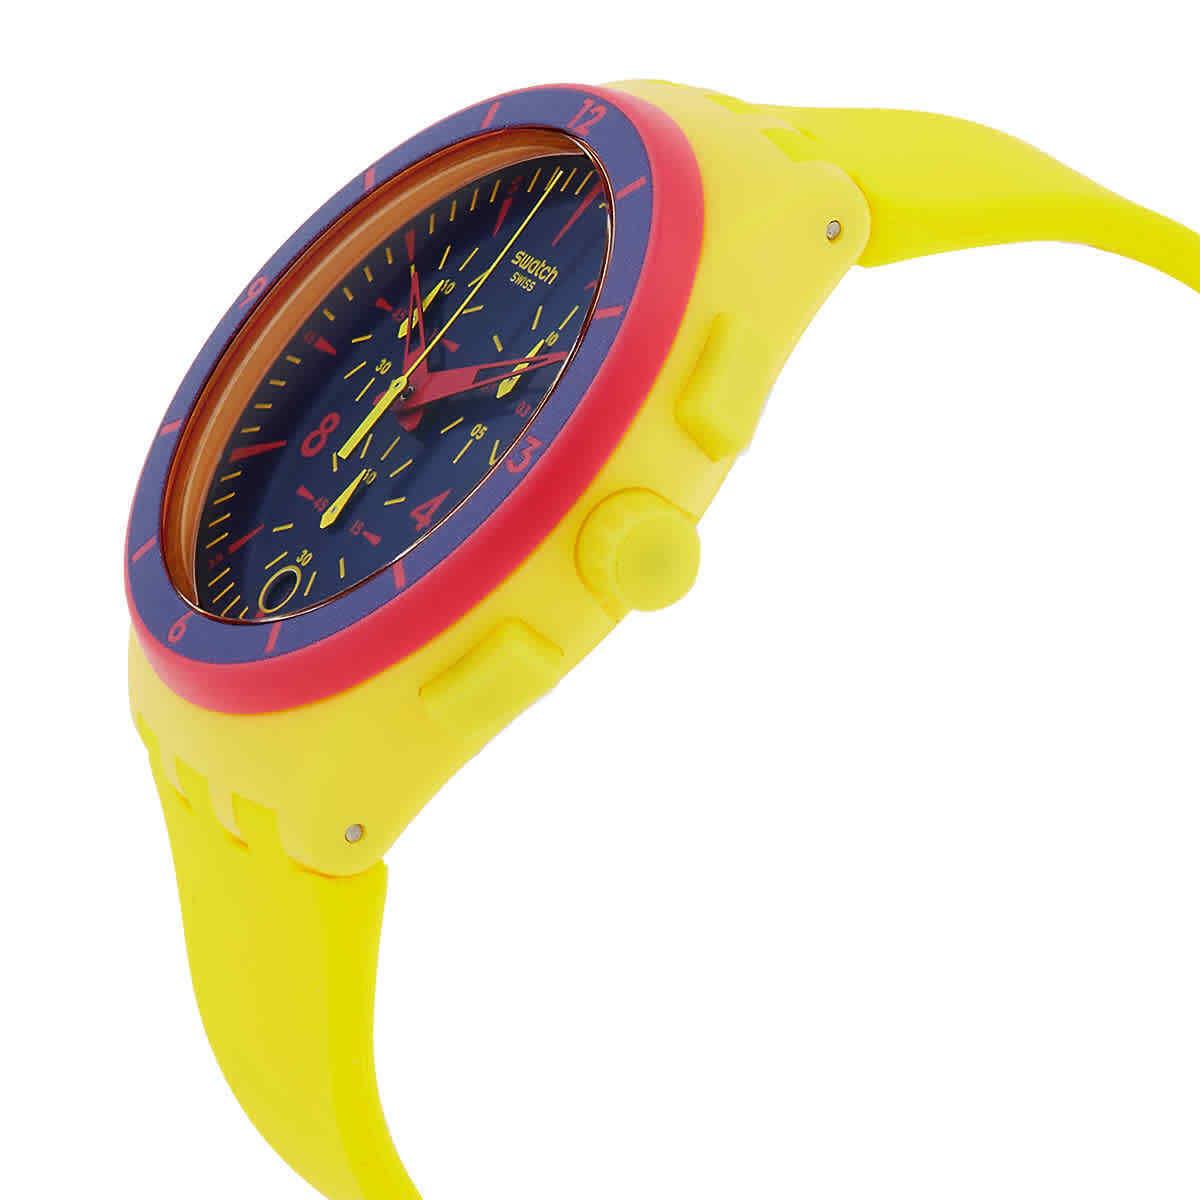 Swatch Glow Loom Chronograph Quartz Blue Dial Men`s Watch SUSJ400 - Dial: Blue, Band: Yellow, Bezel: Yellow